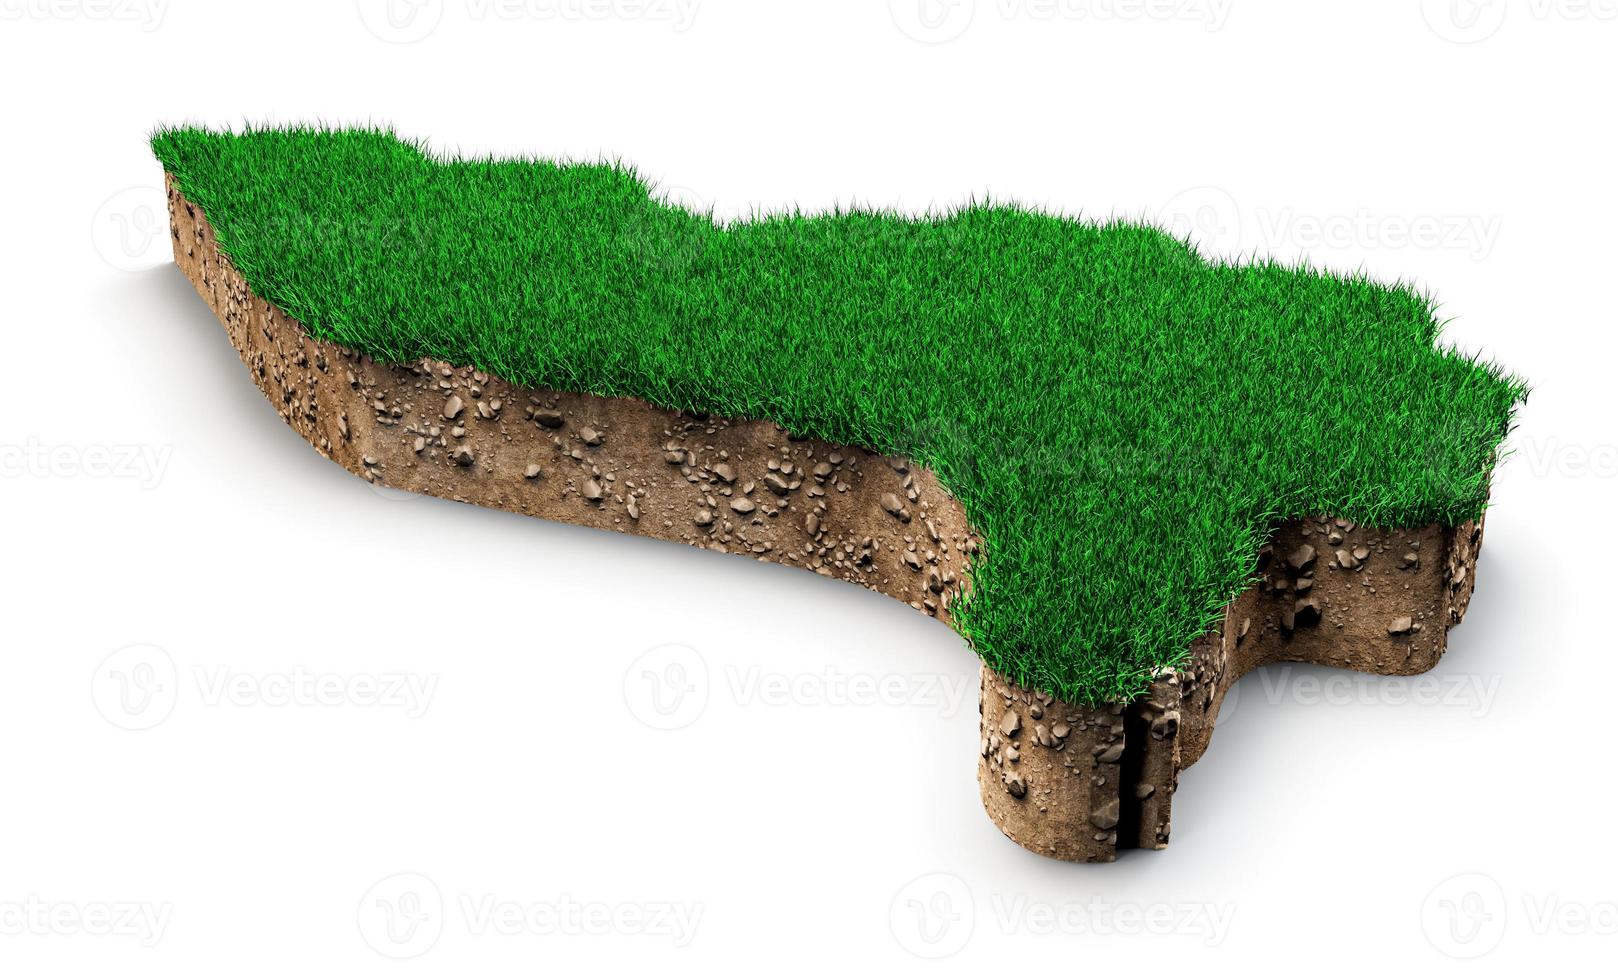 liechtenstein karte boden land geologie querschnitt mit grünem gras und felsen bodentextur 3d illustration foto